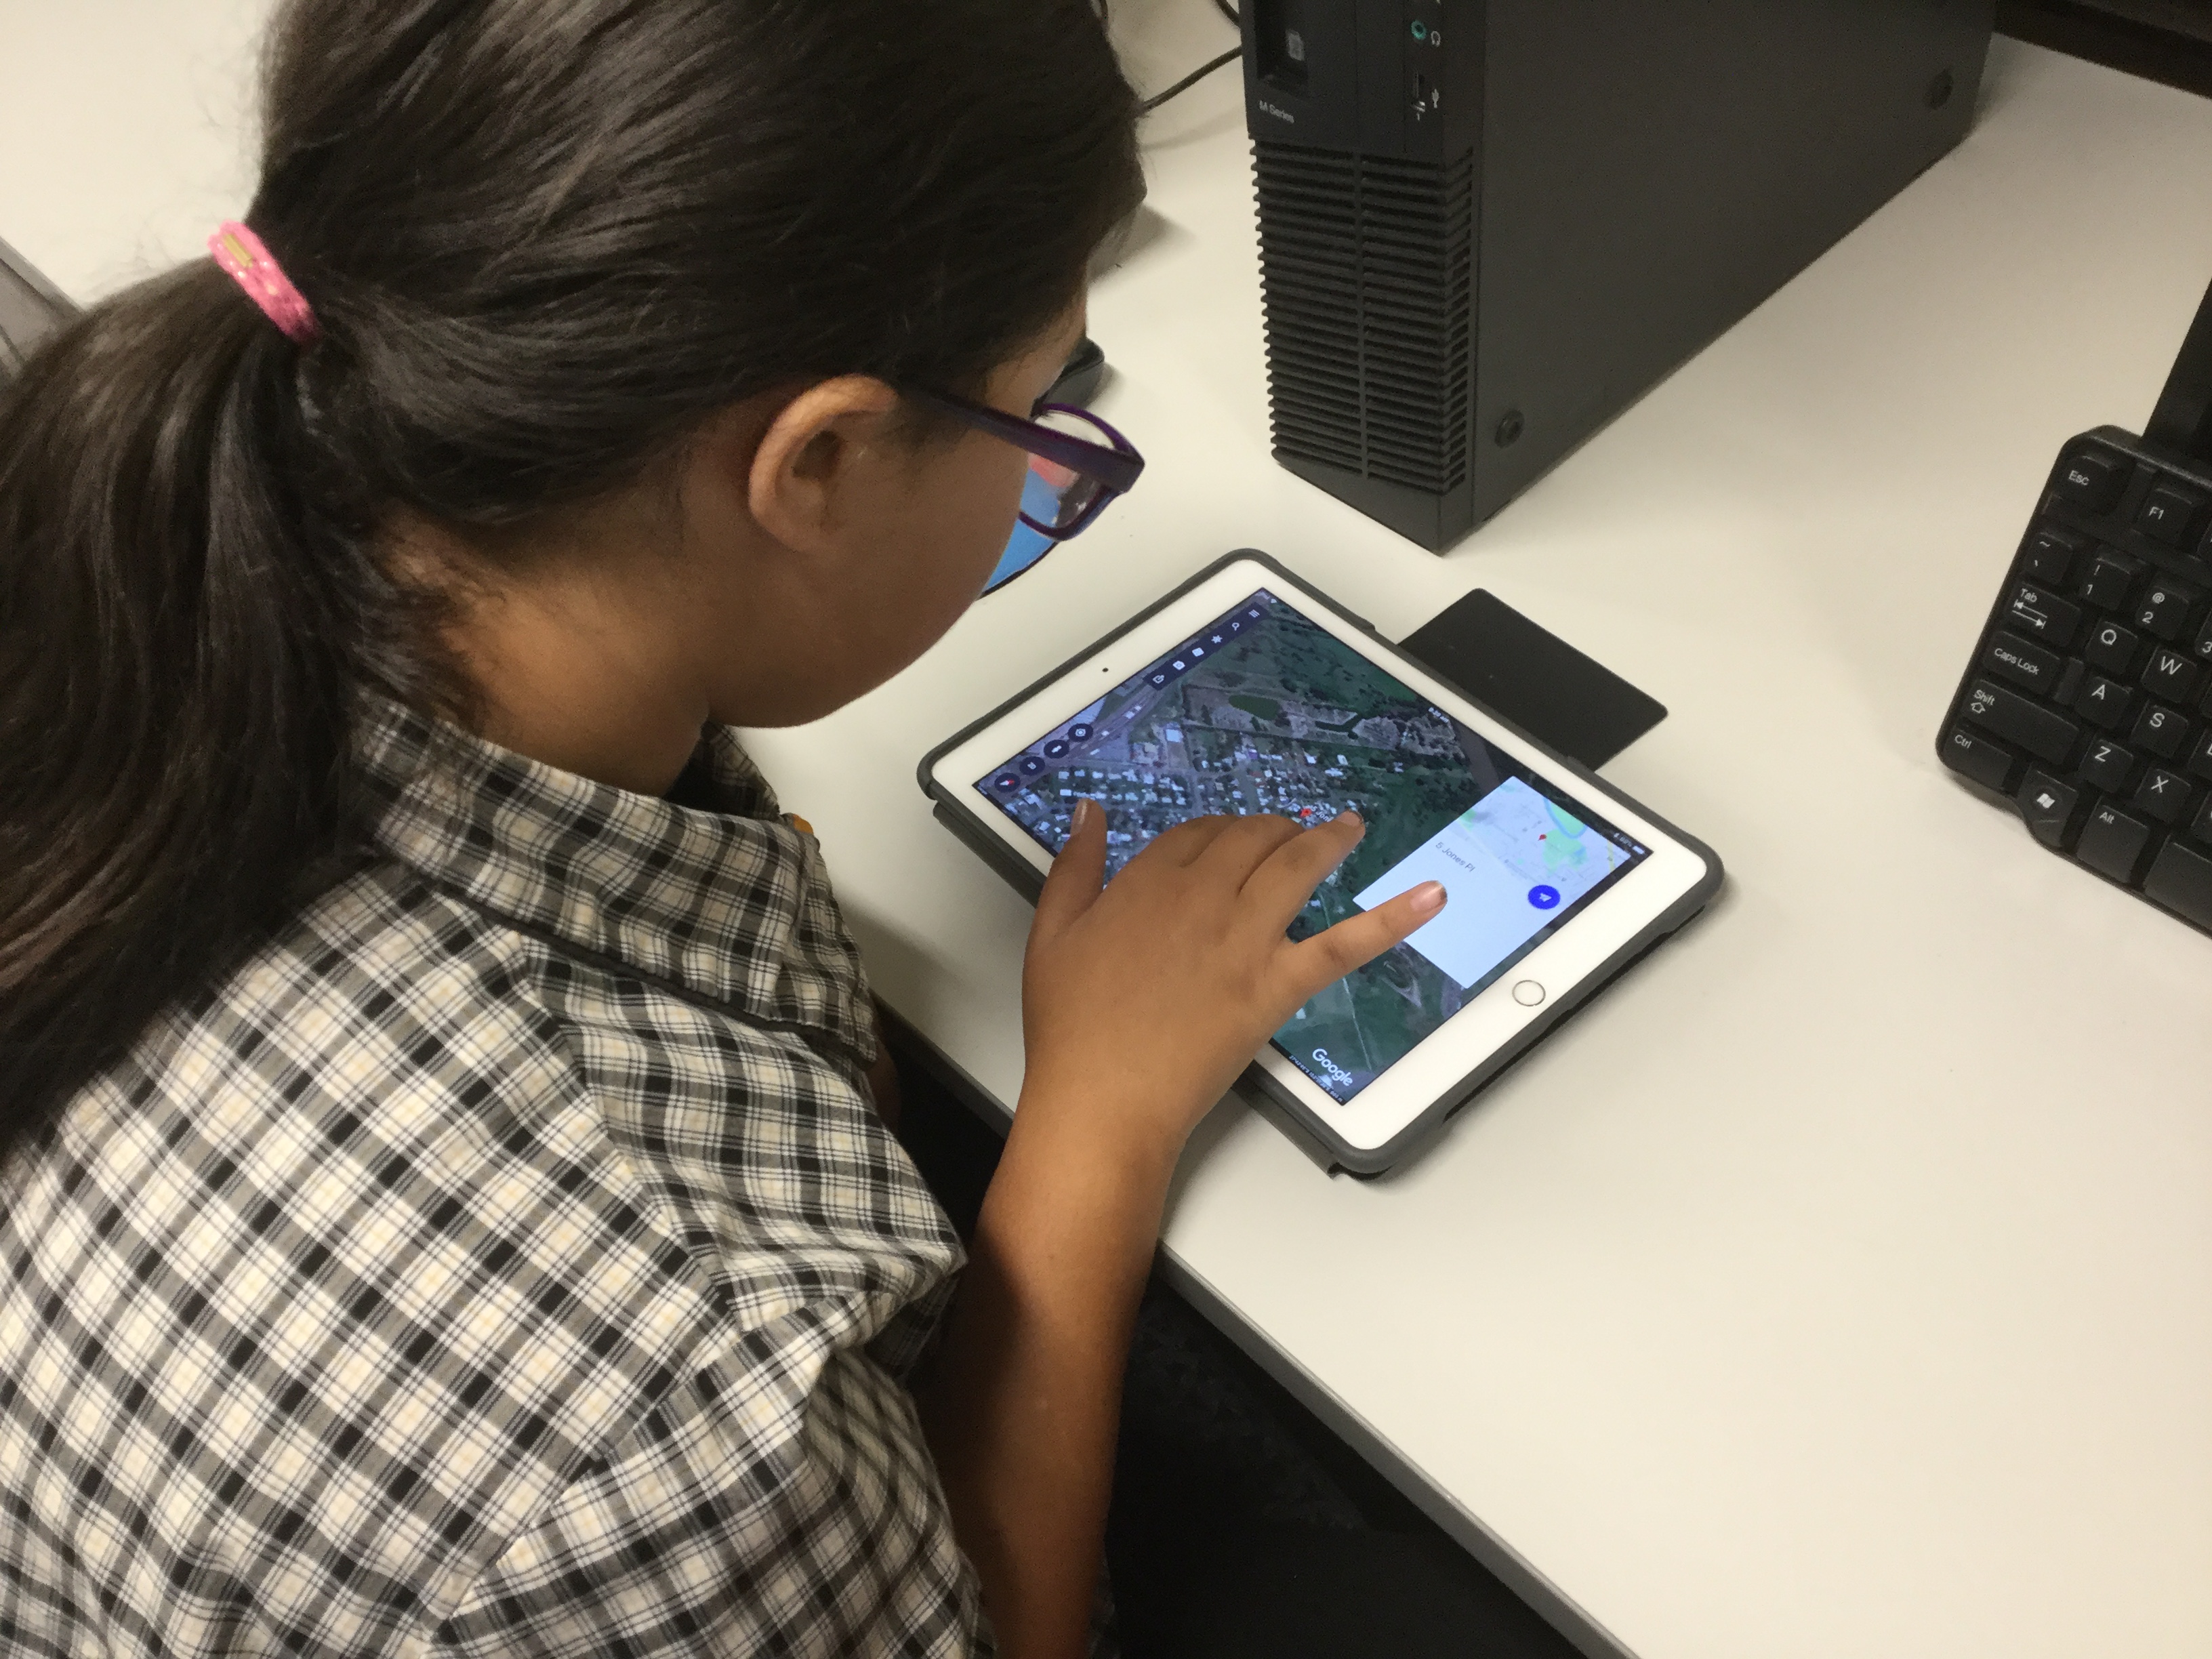 Student working on iPad on desk